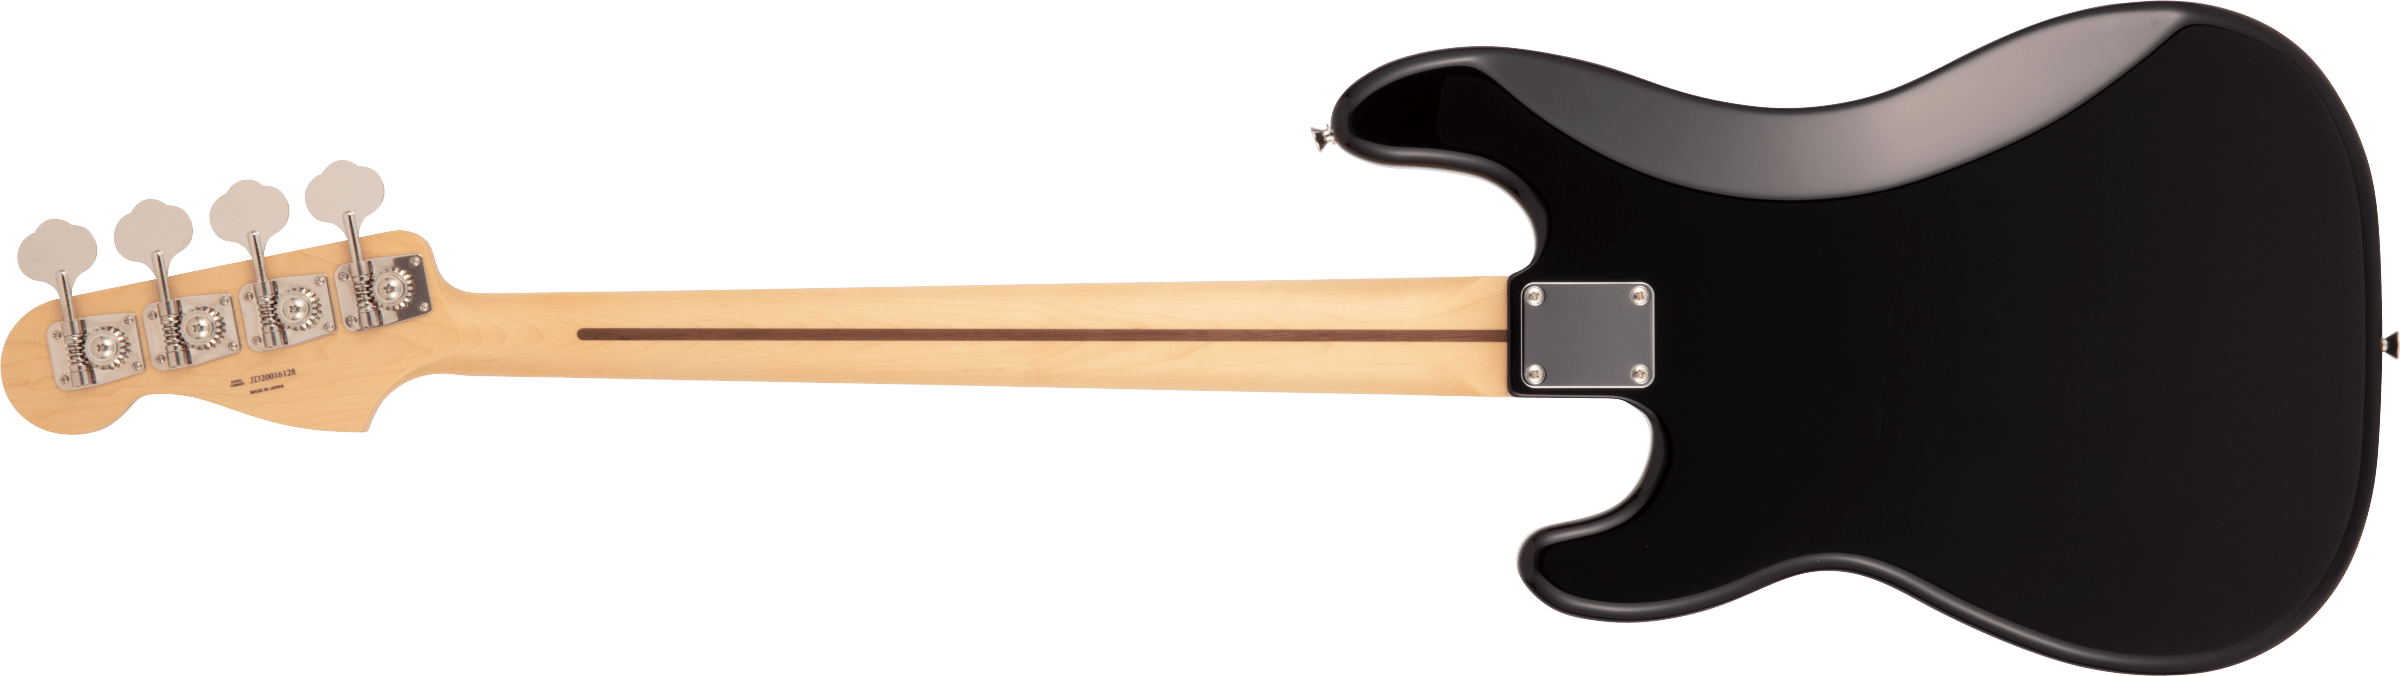 Fender Precision Bass Hybrid Ii Japan Mn - Black - Solid body electric bass - Variation 1